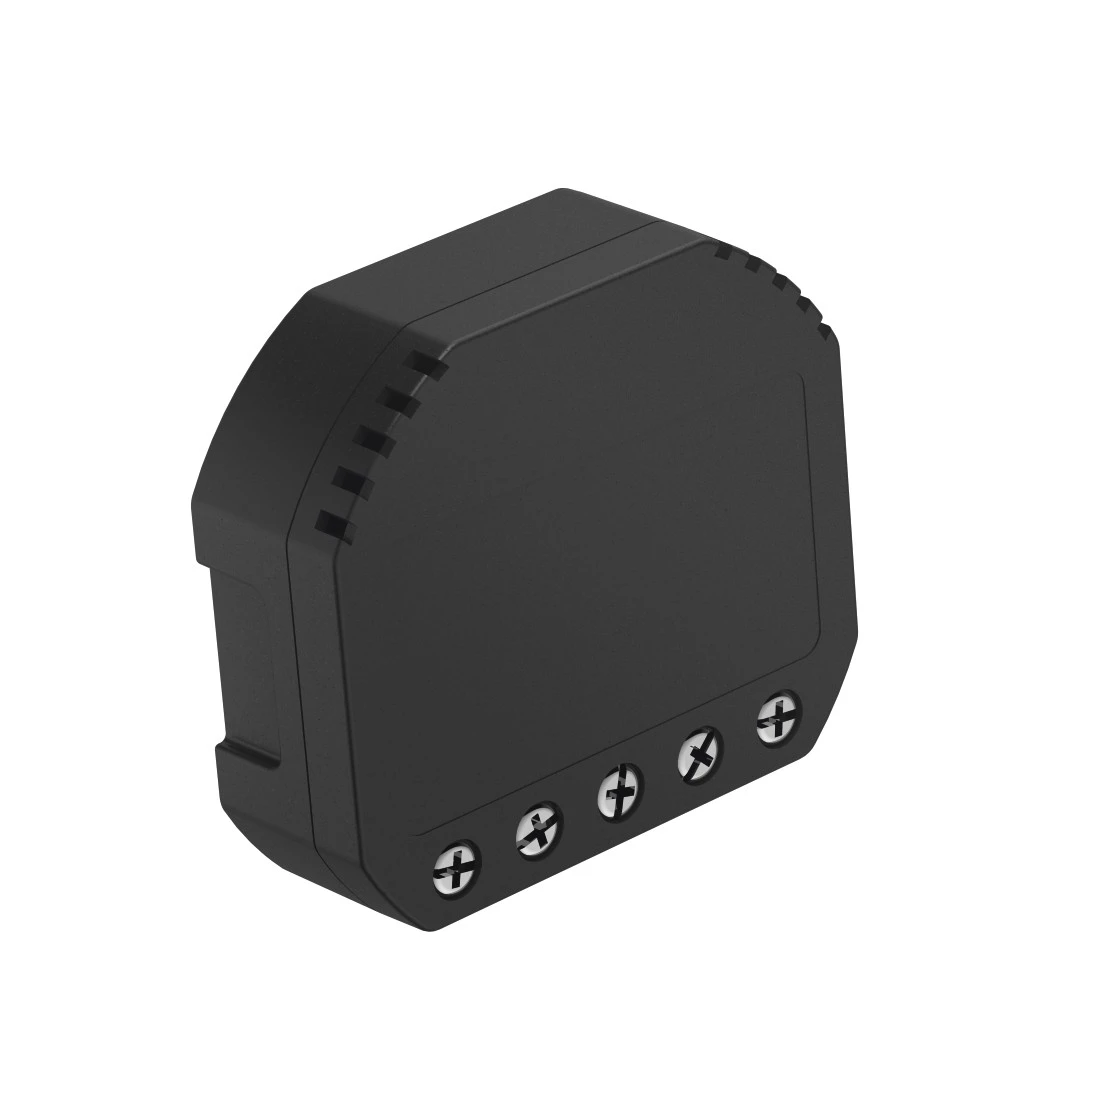 Hama 00176556 WiFi Retrofit Switch for Lights and Sockets, Flush Installation